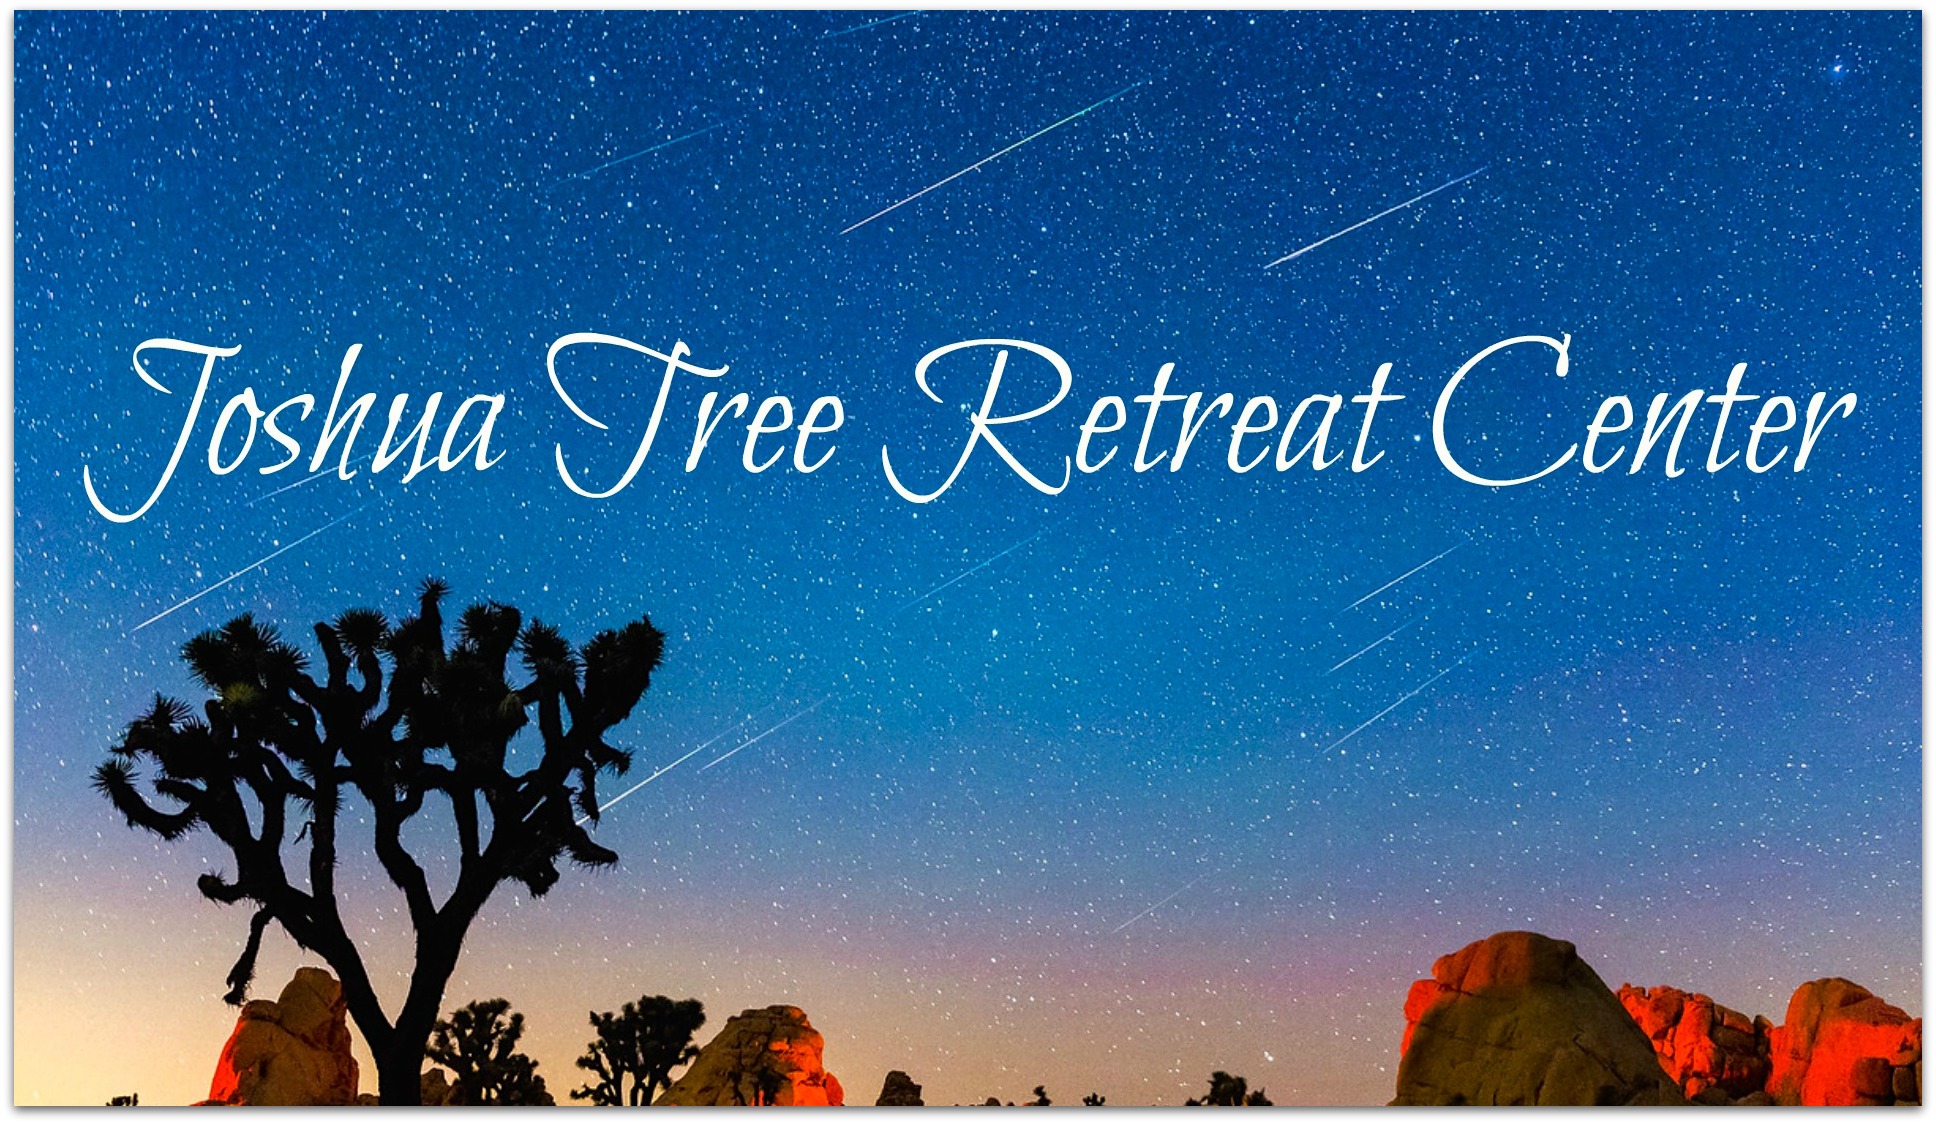 Joshua Tree Retreat Center 